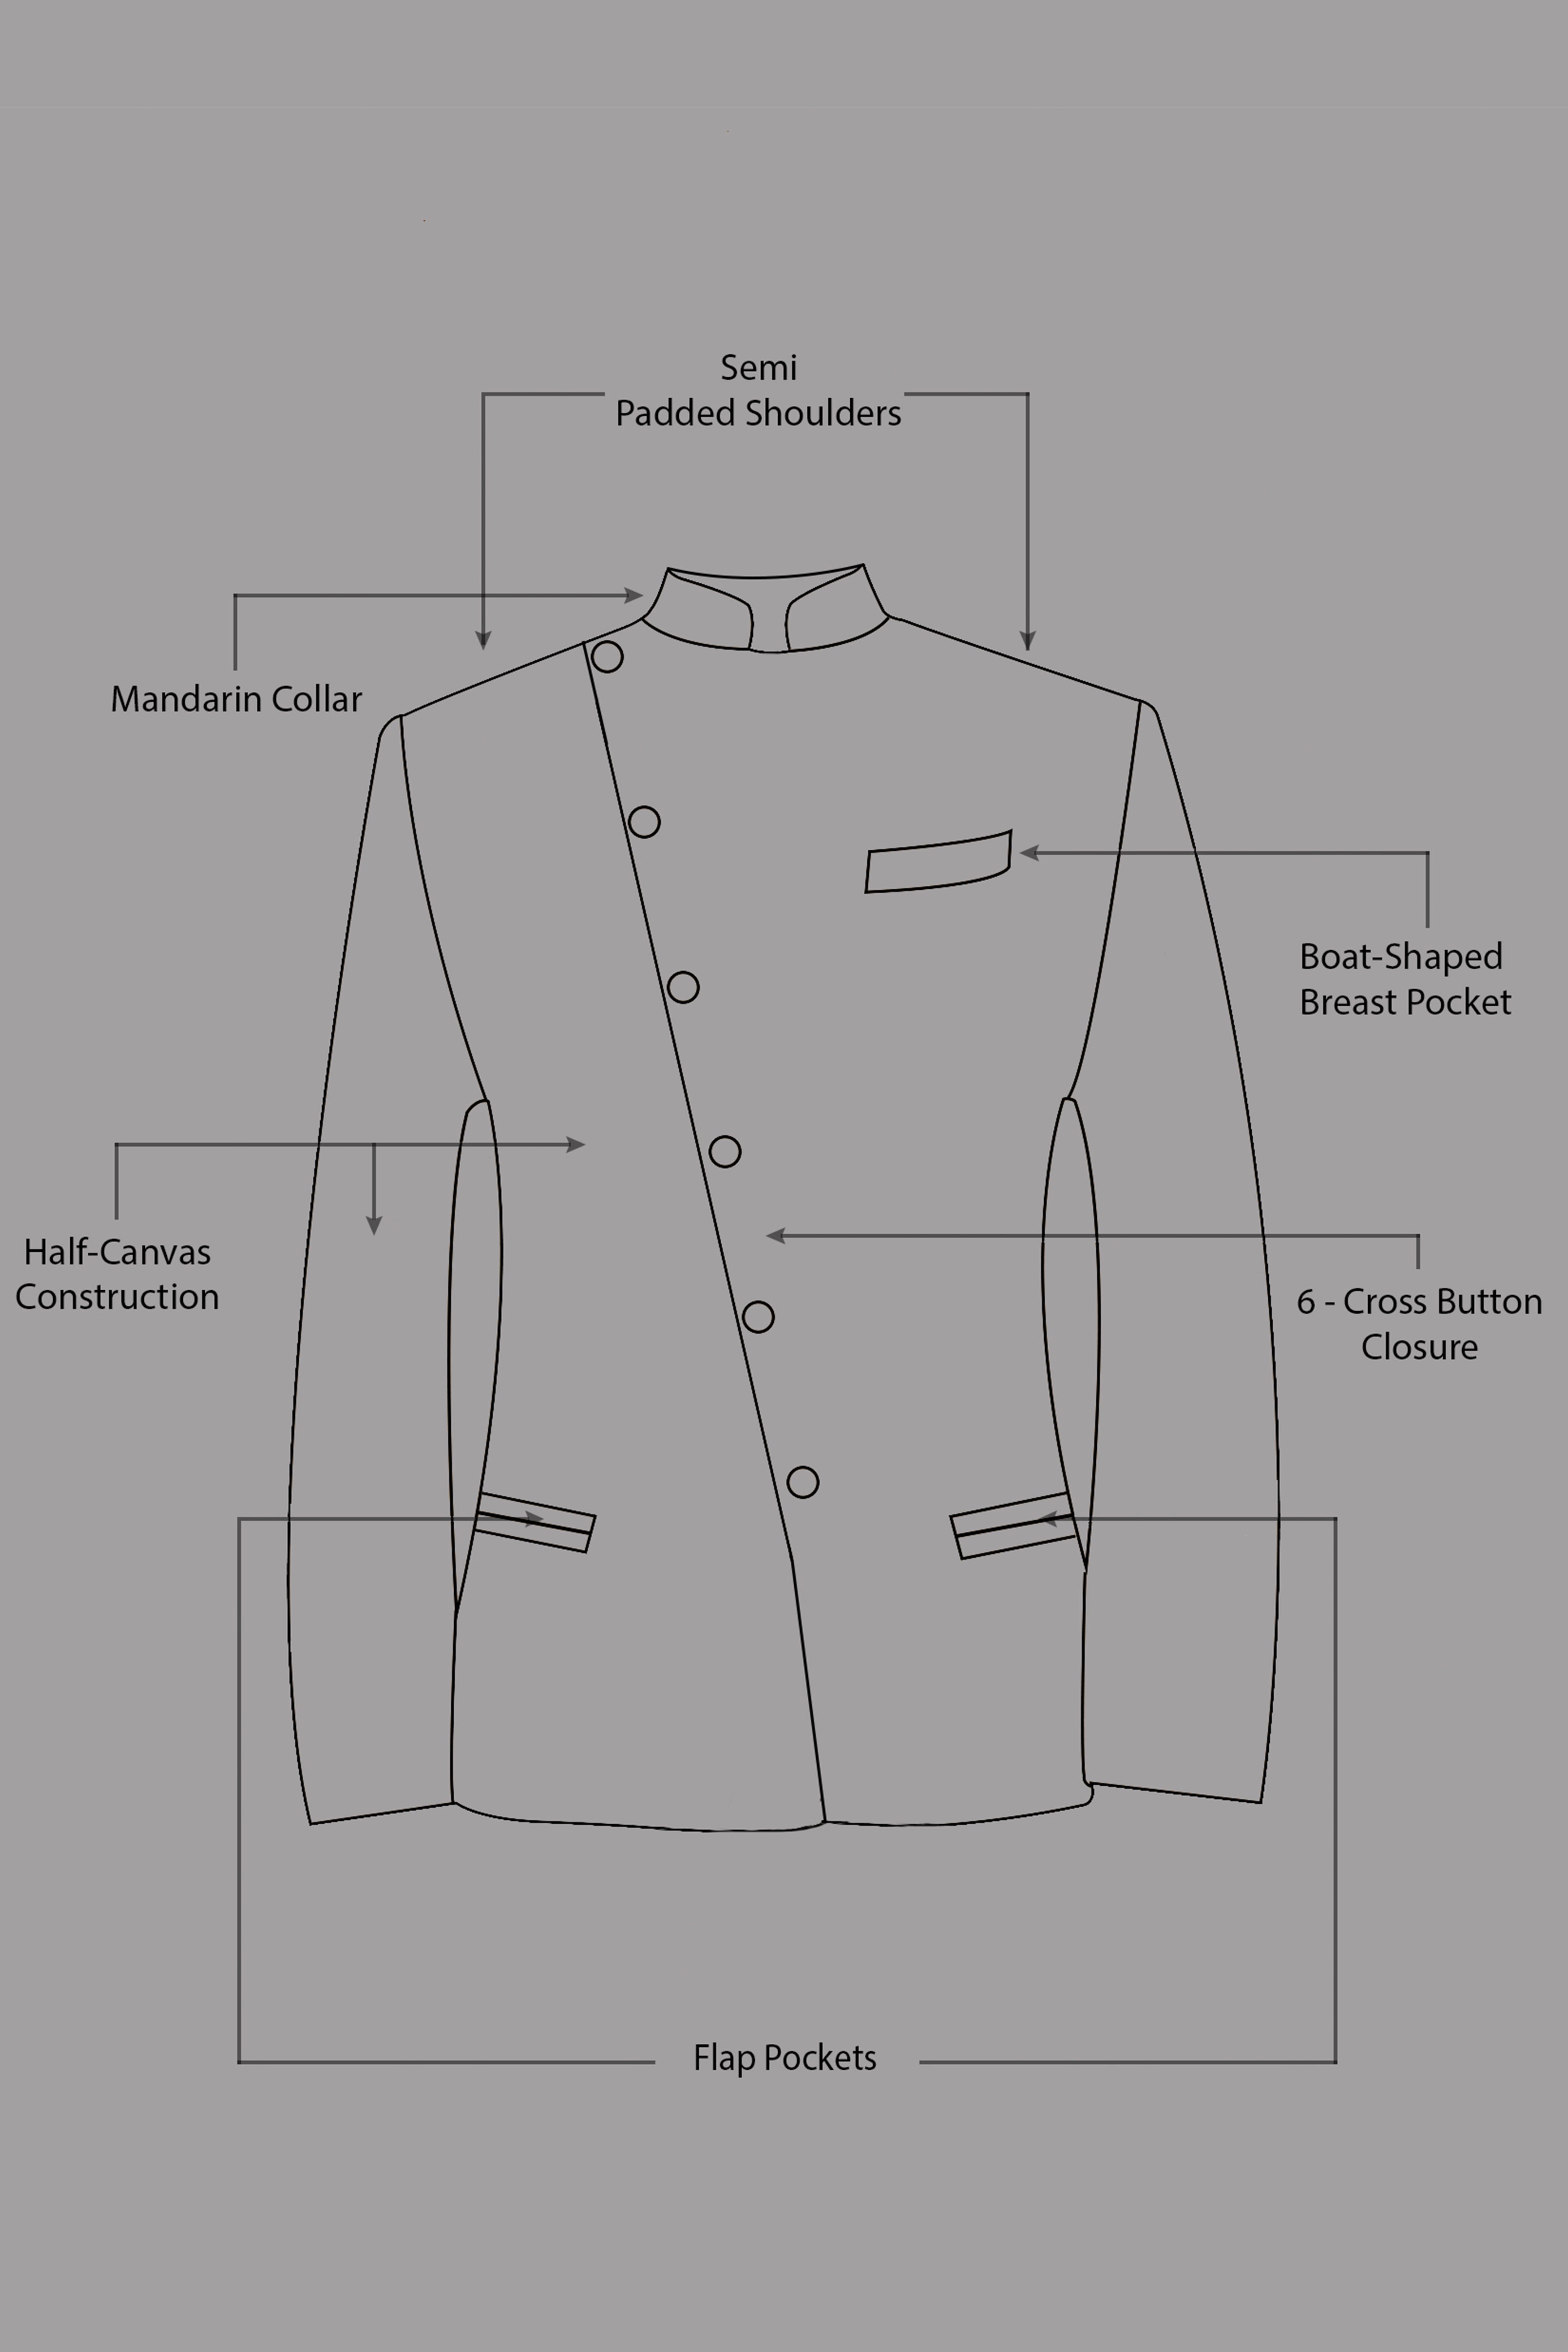 Nile Blue Wool Rich Cross Placket Bandhgala Suit